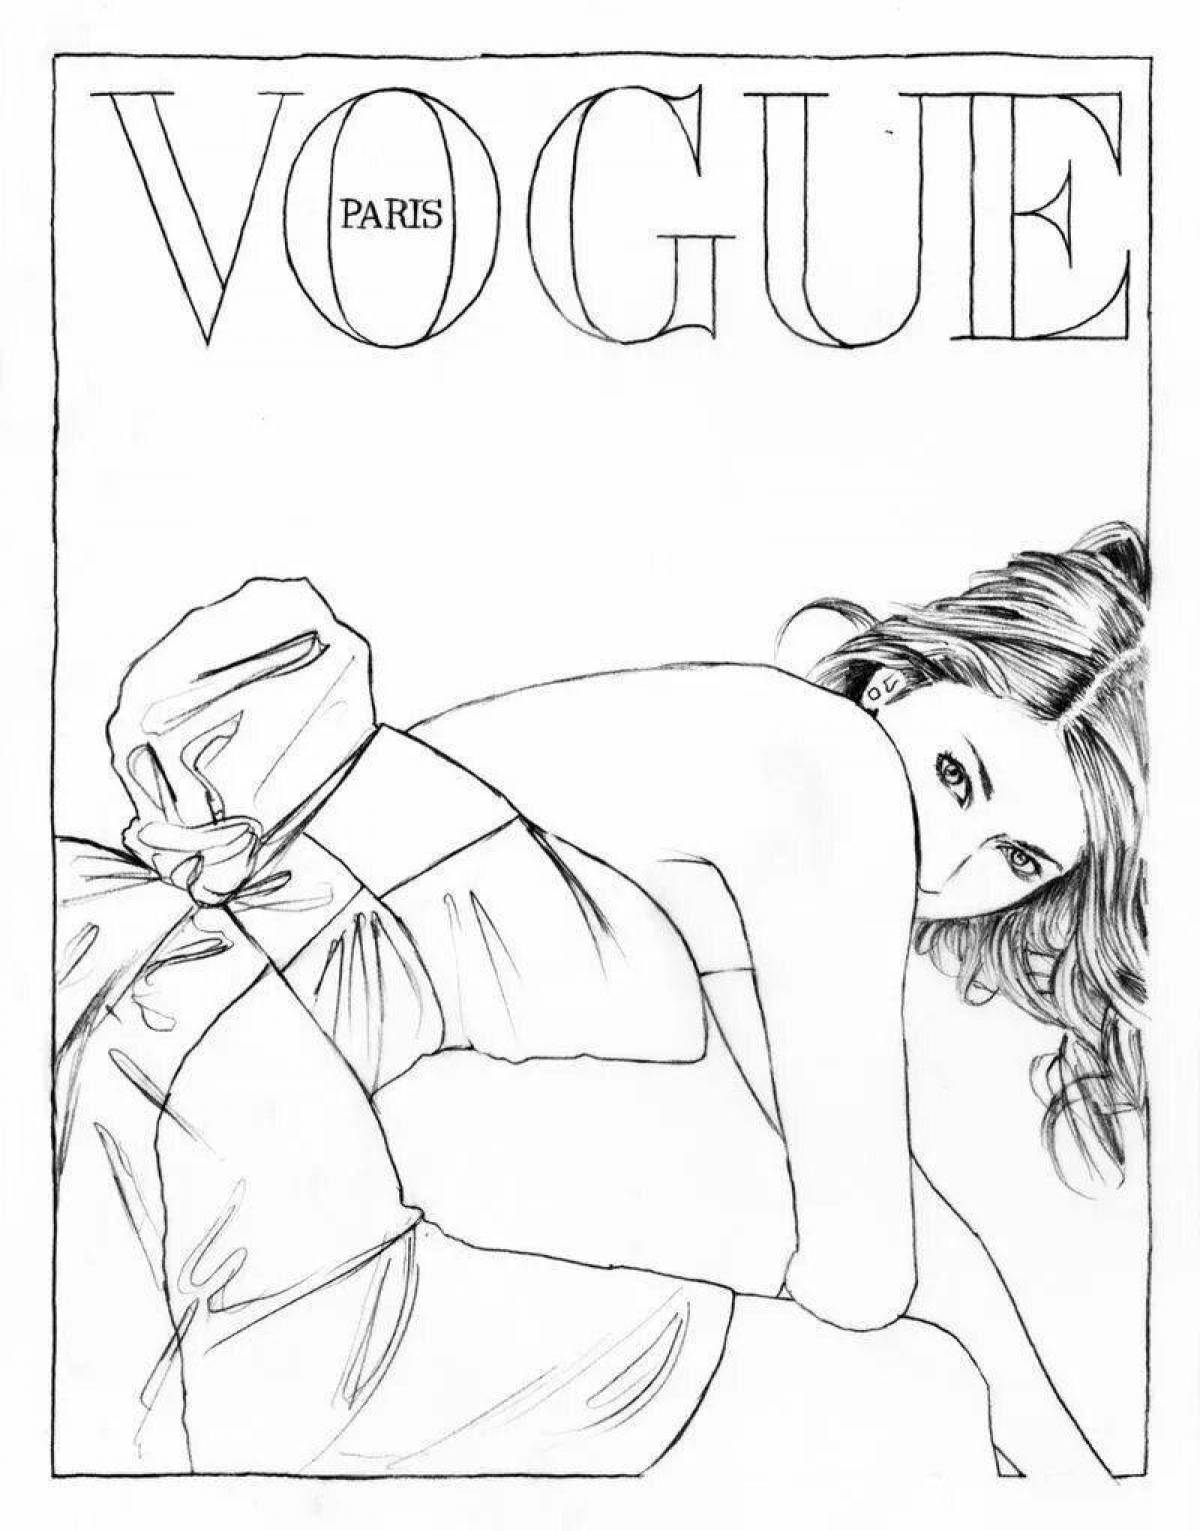 Vogue #8